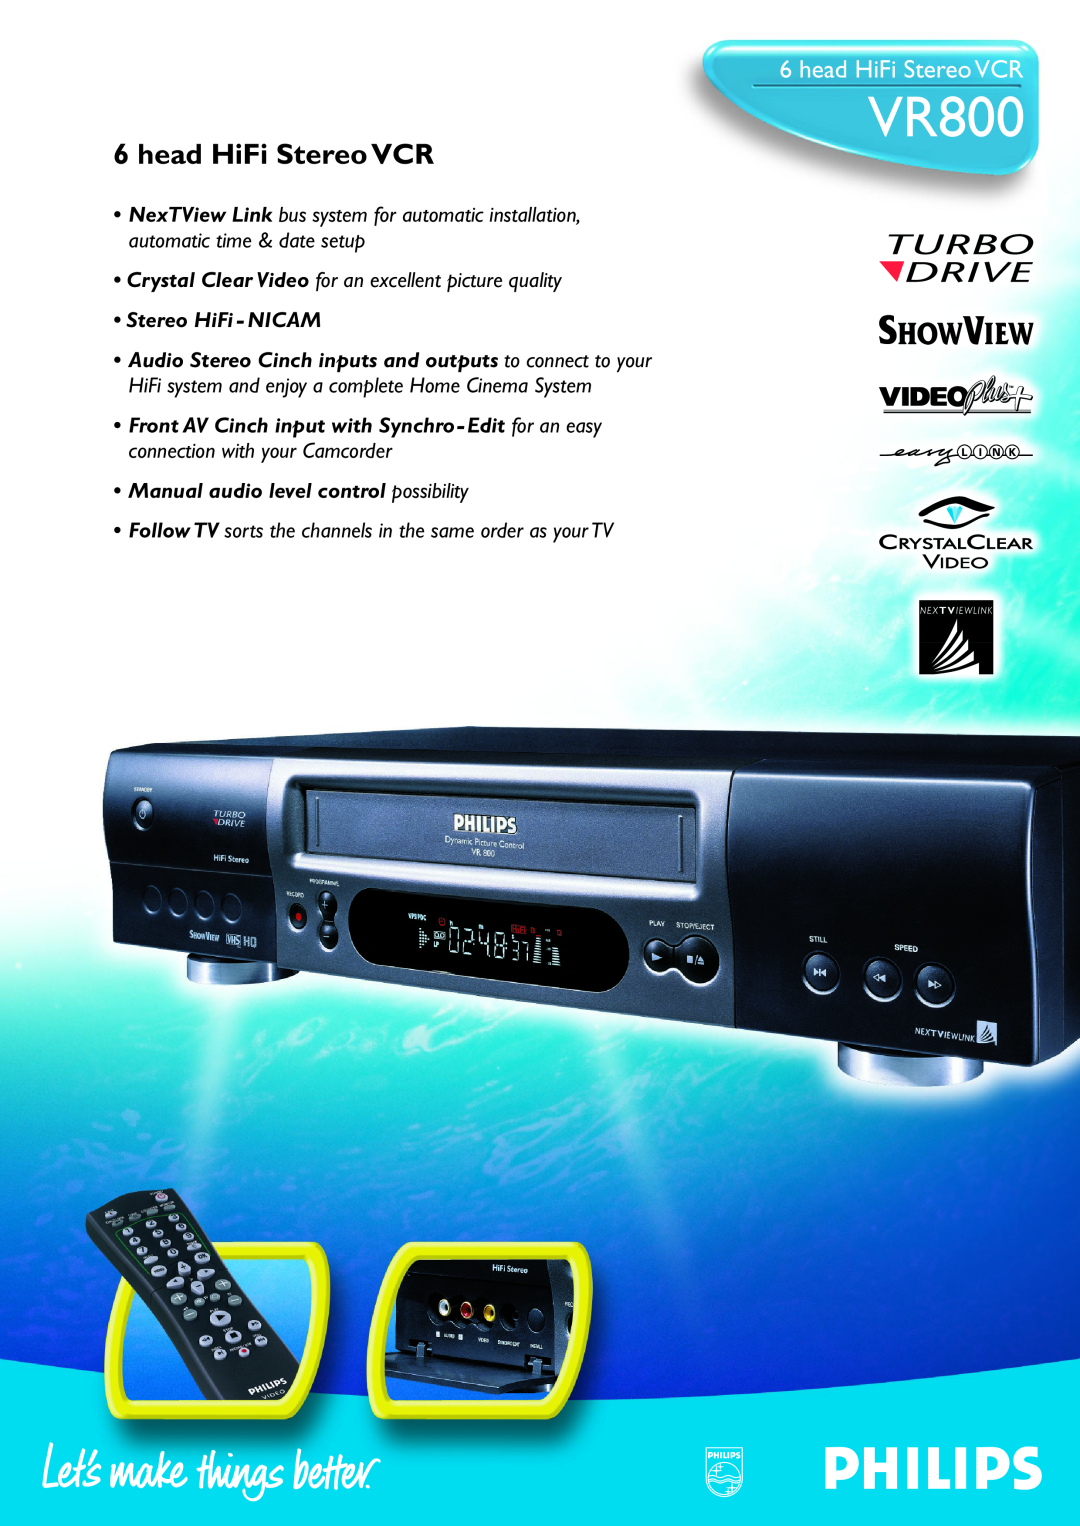 Philips VR800 manual head HiFi Stereo VCR, Stereo HiFi - NICAM, Manual audio level control possibility 